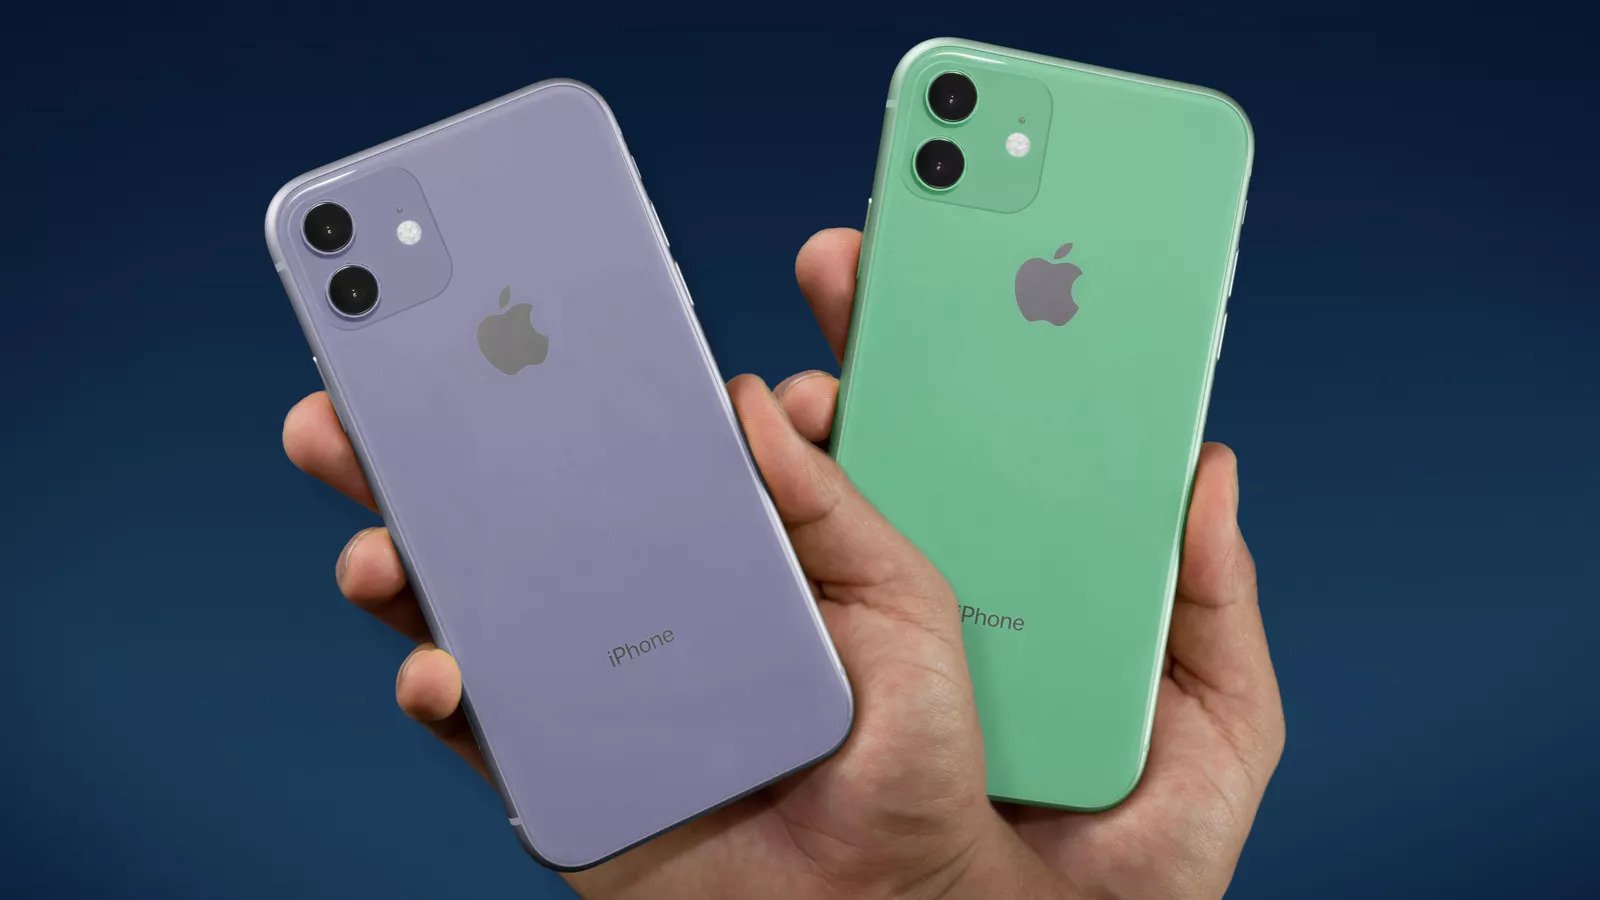 iPhone XR รุ่นใหม่ที่จะเปิดตัวปี 2019 นี้ จะมีแบตเตอรีมากขึ้นอีก 5%